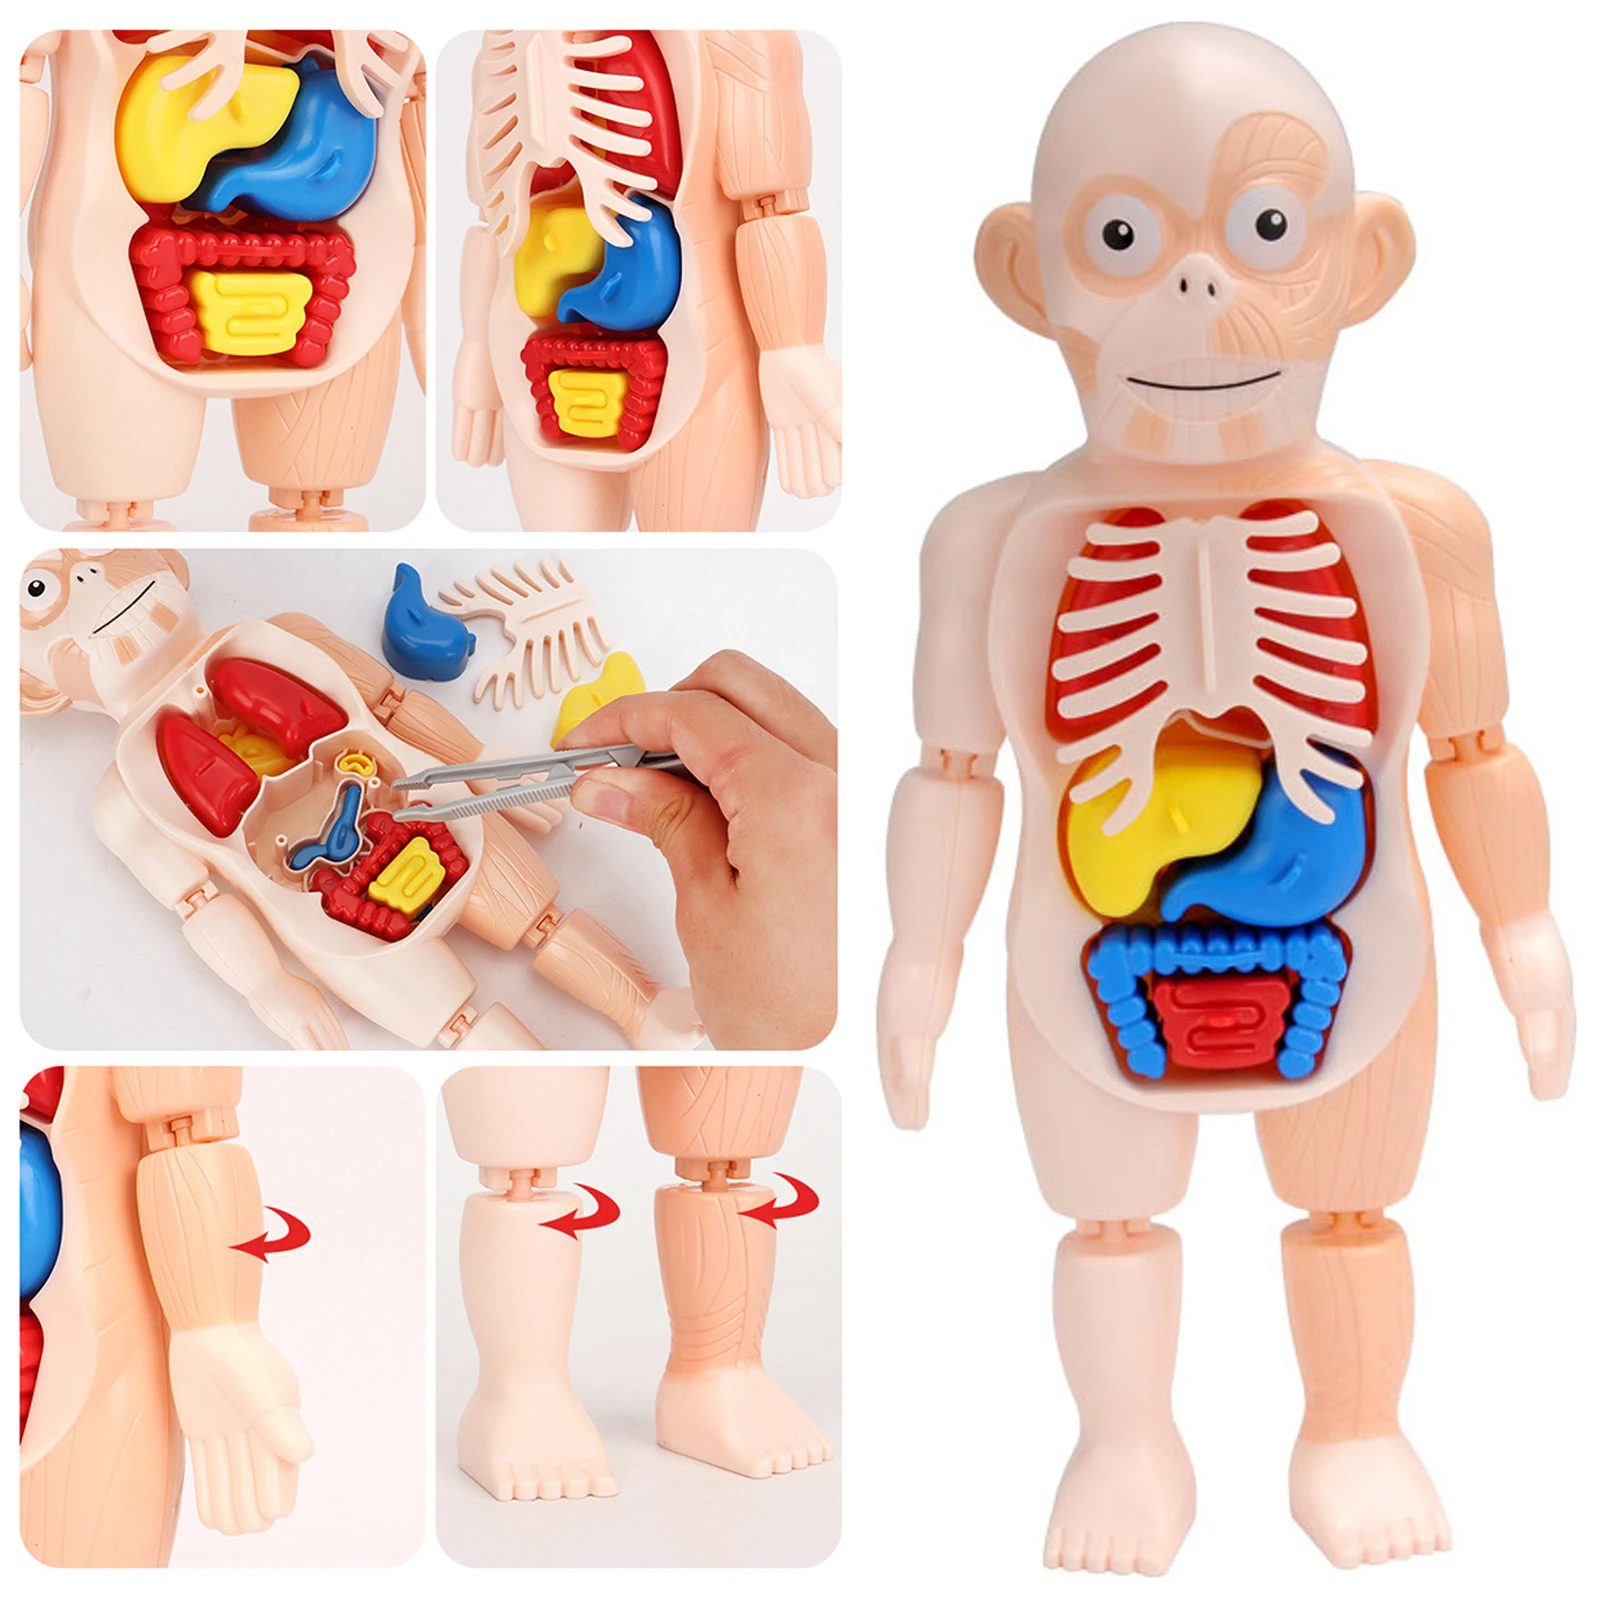 Human Organ Model Toys - BUY 2 FREE SHIPPING